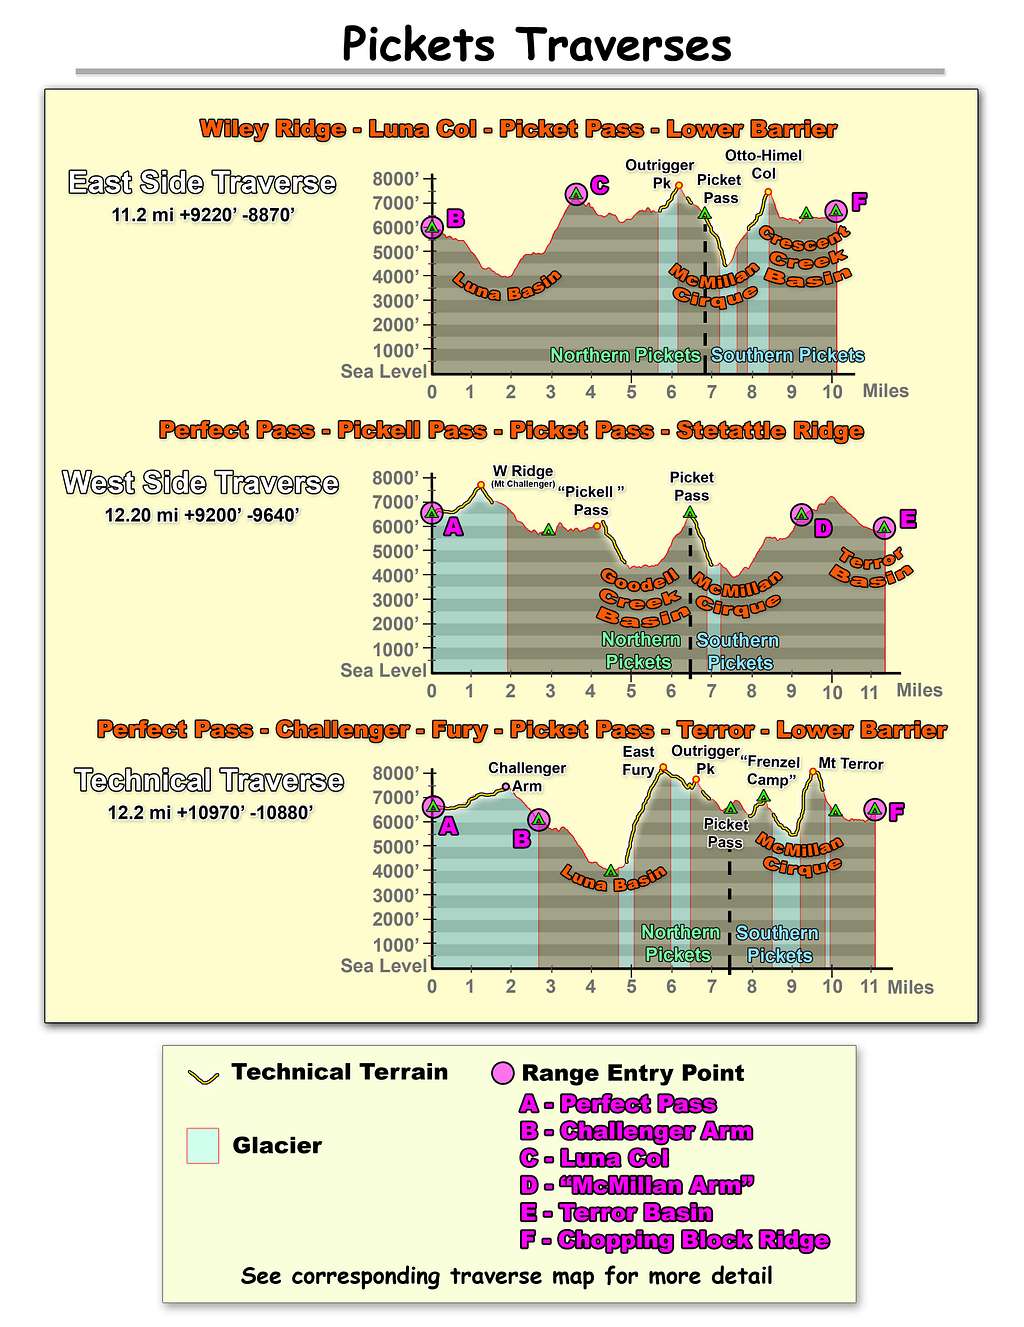 Traverse Profiles - Pickets Range